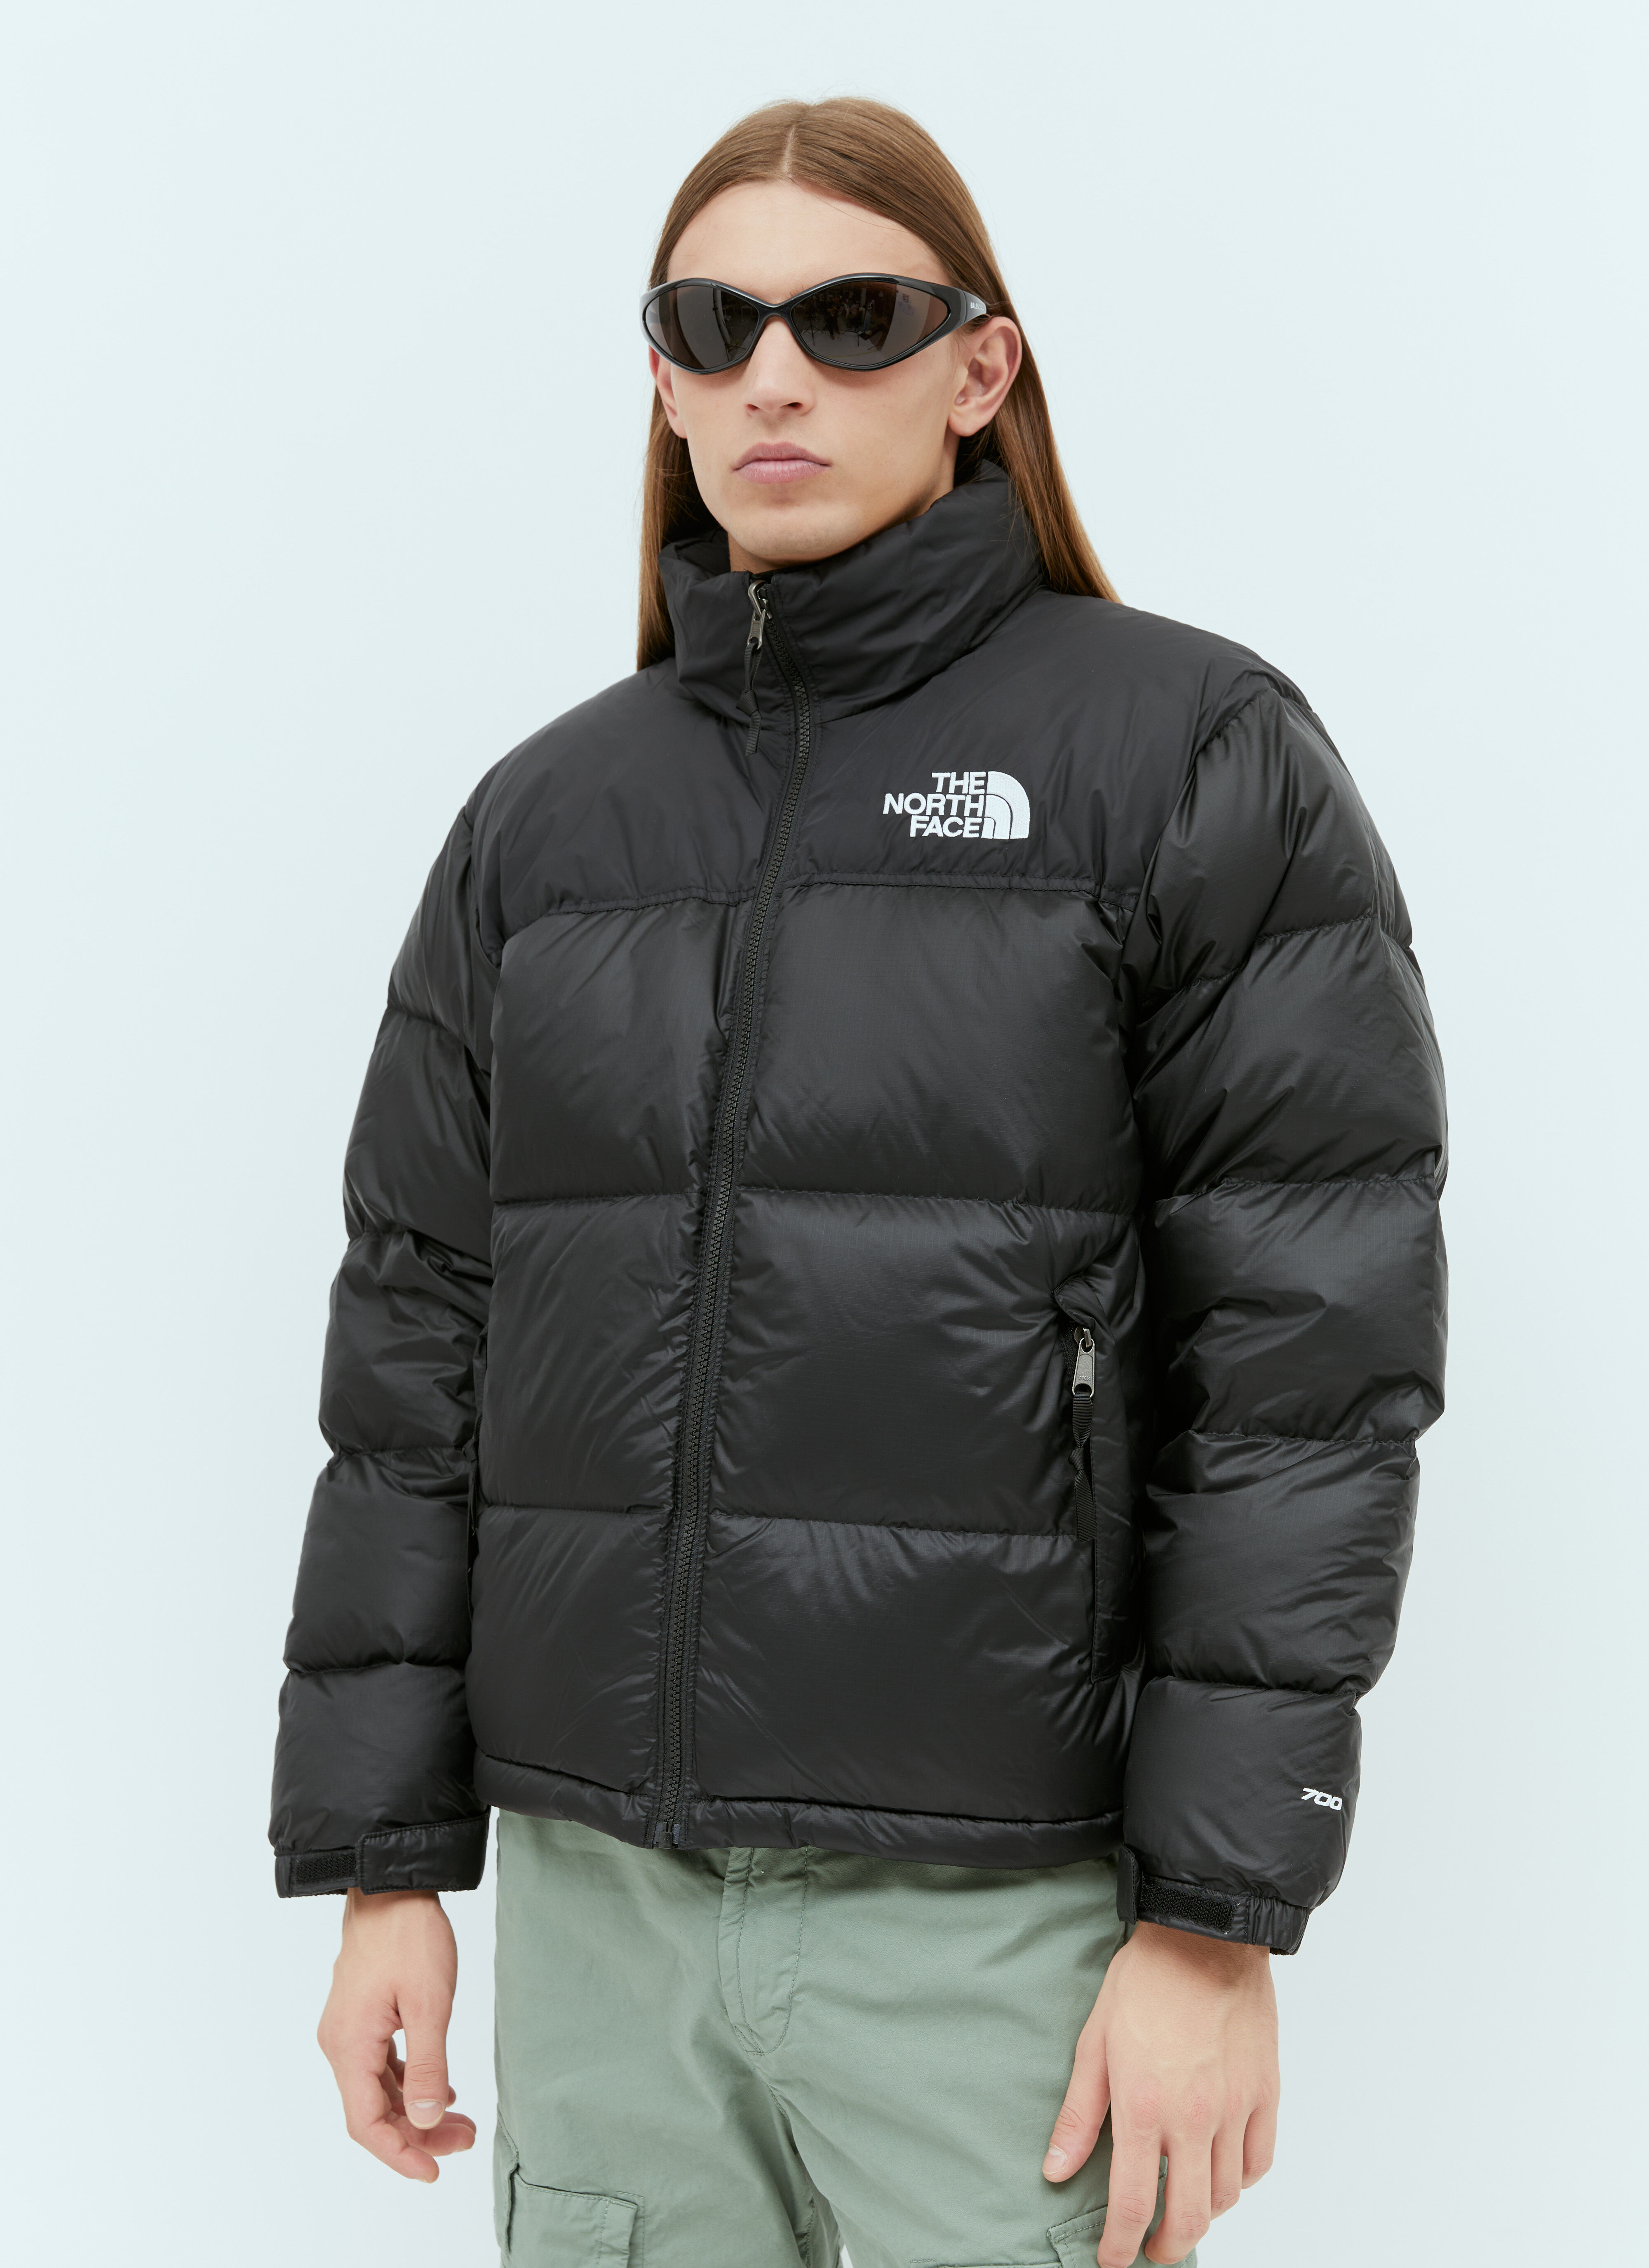 The North Face 1996 Retro Nuptse Jacket Black tnf0156020